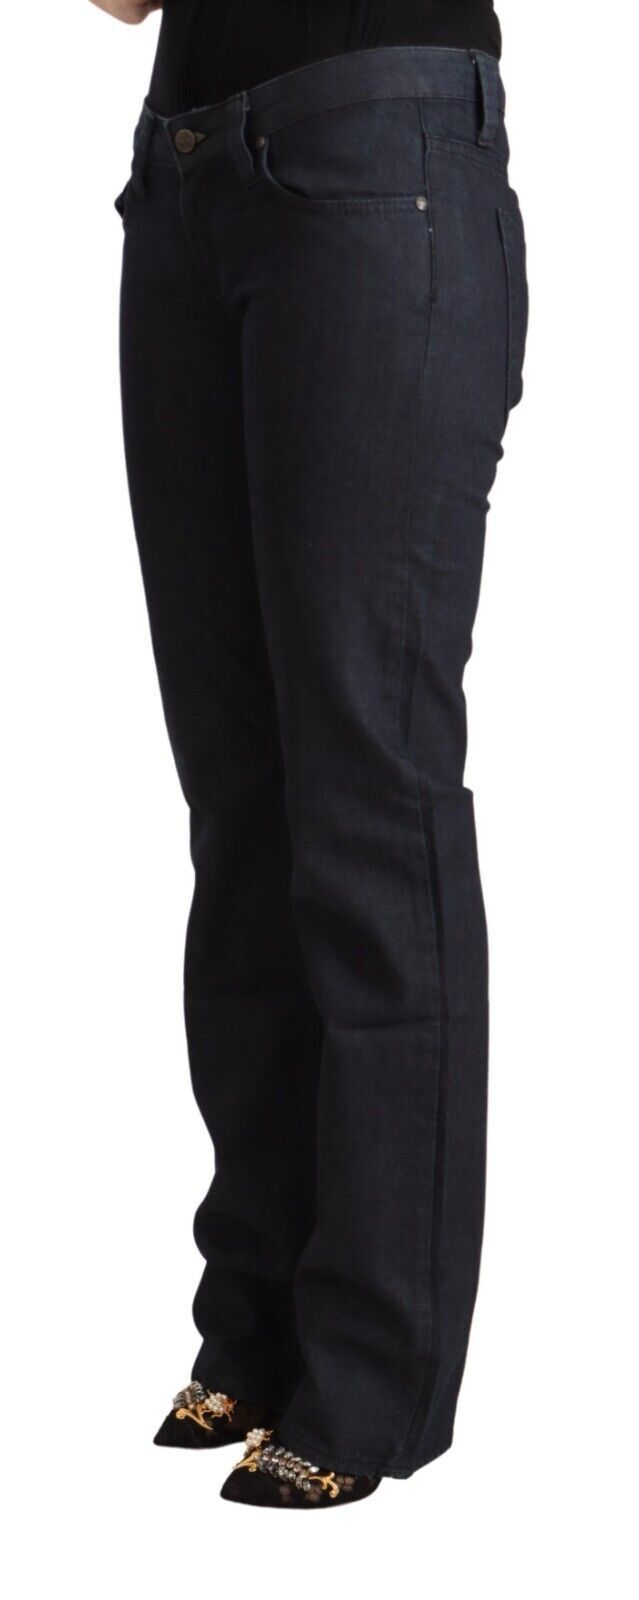 Exte dunkelblaue Baumwollstrecke niedrige Taille gerade Jeans Jeans